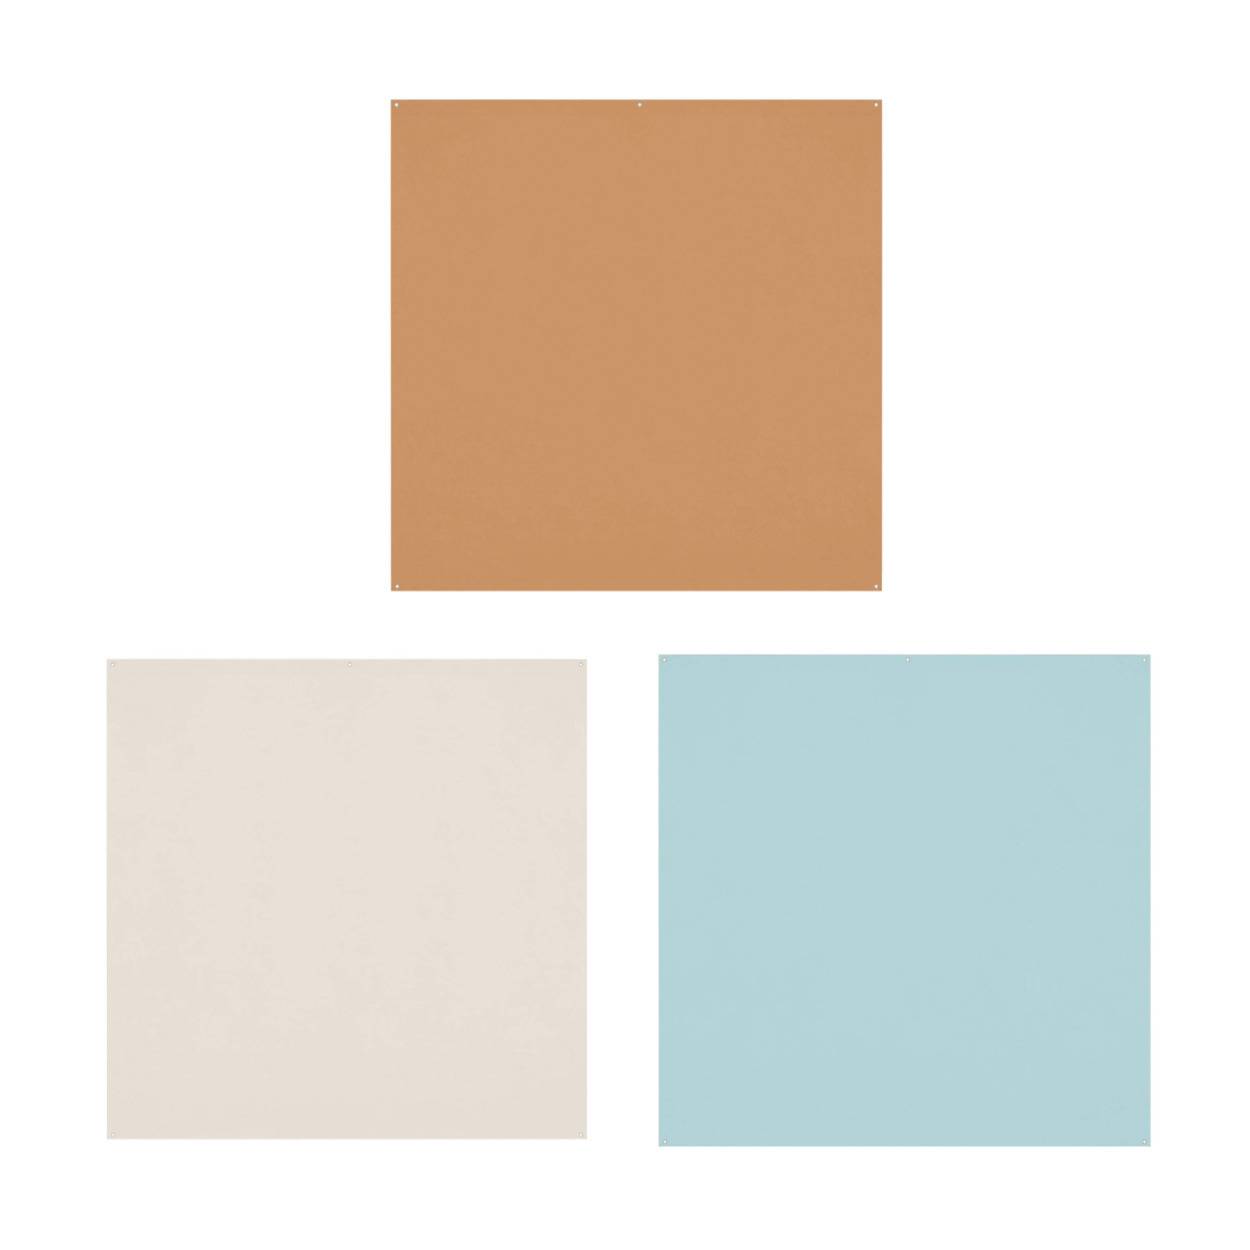 Westcott 8' x 8' Photo Backdrops 3-Pack Colors (Brown Sugar, Buttermilk White, Pastel Blue)